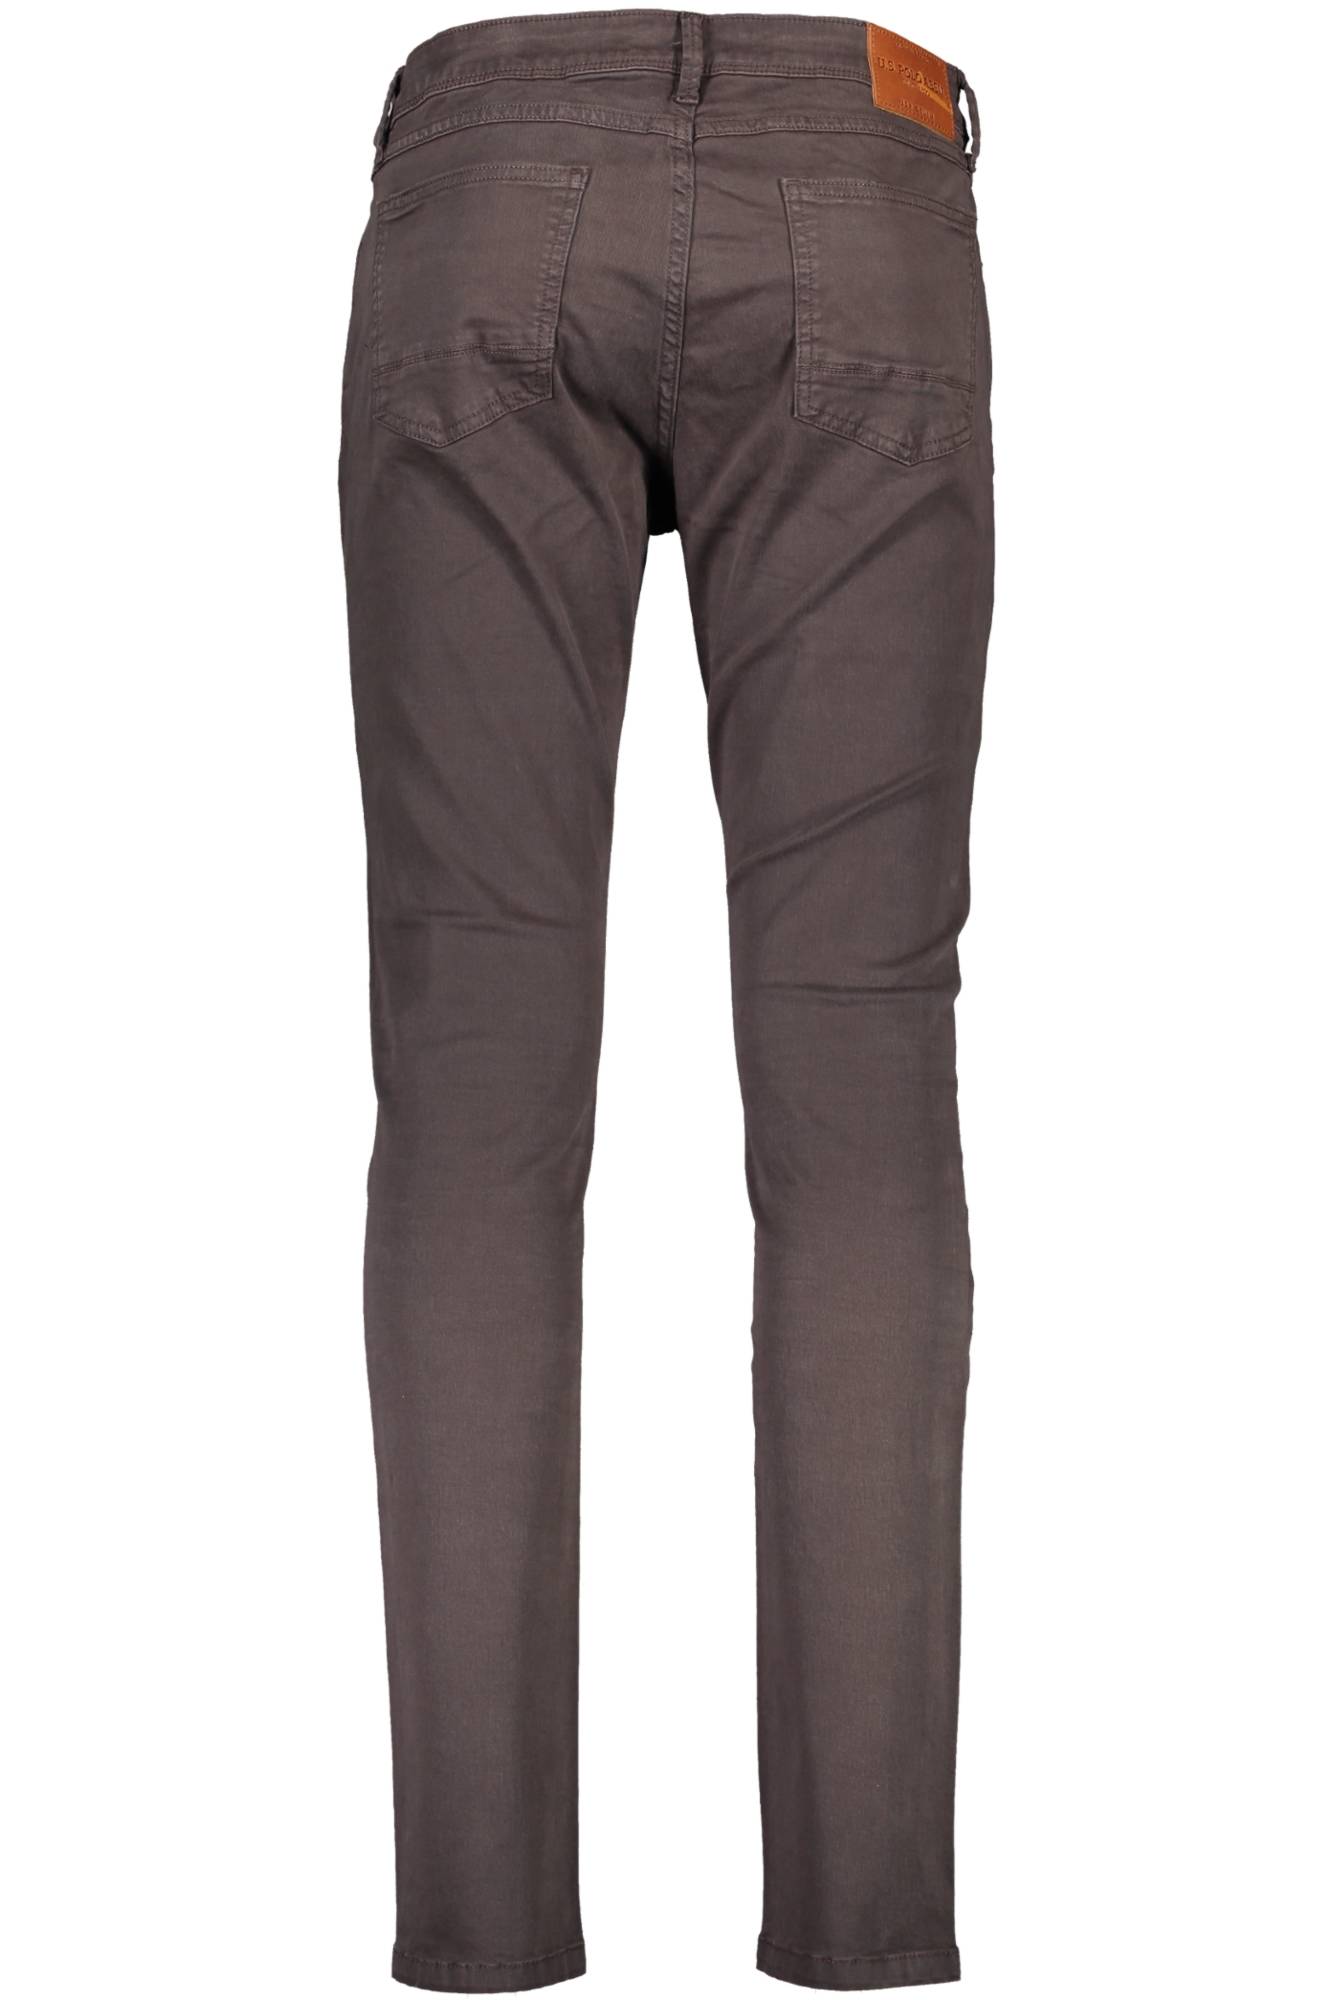 U.S. POLO ASSN. Brown Jeans & Pant - Fizigo